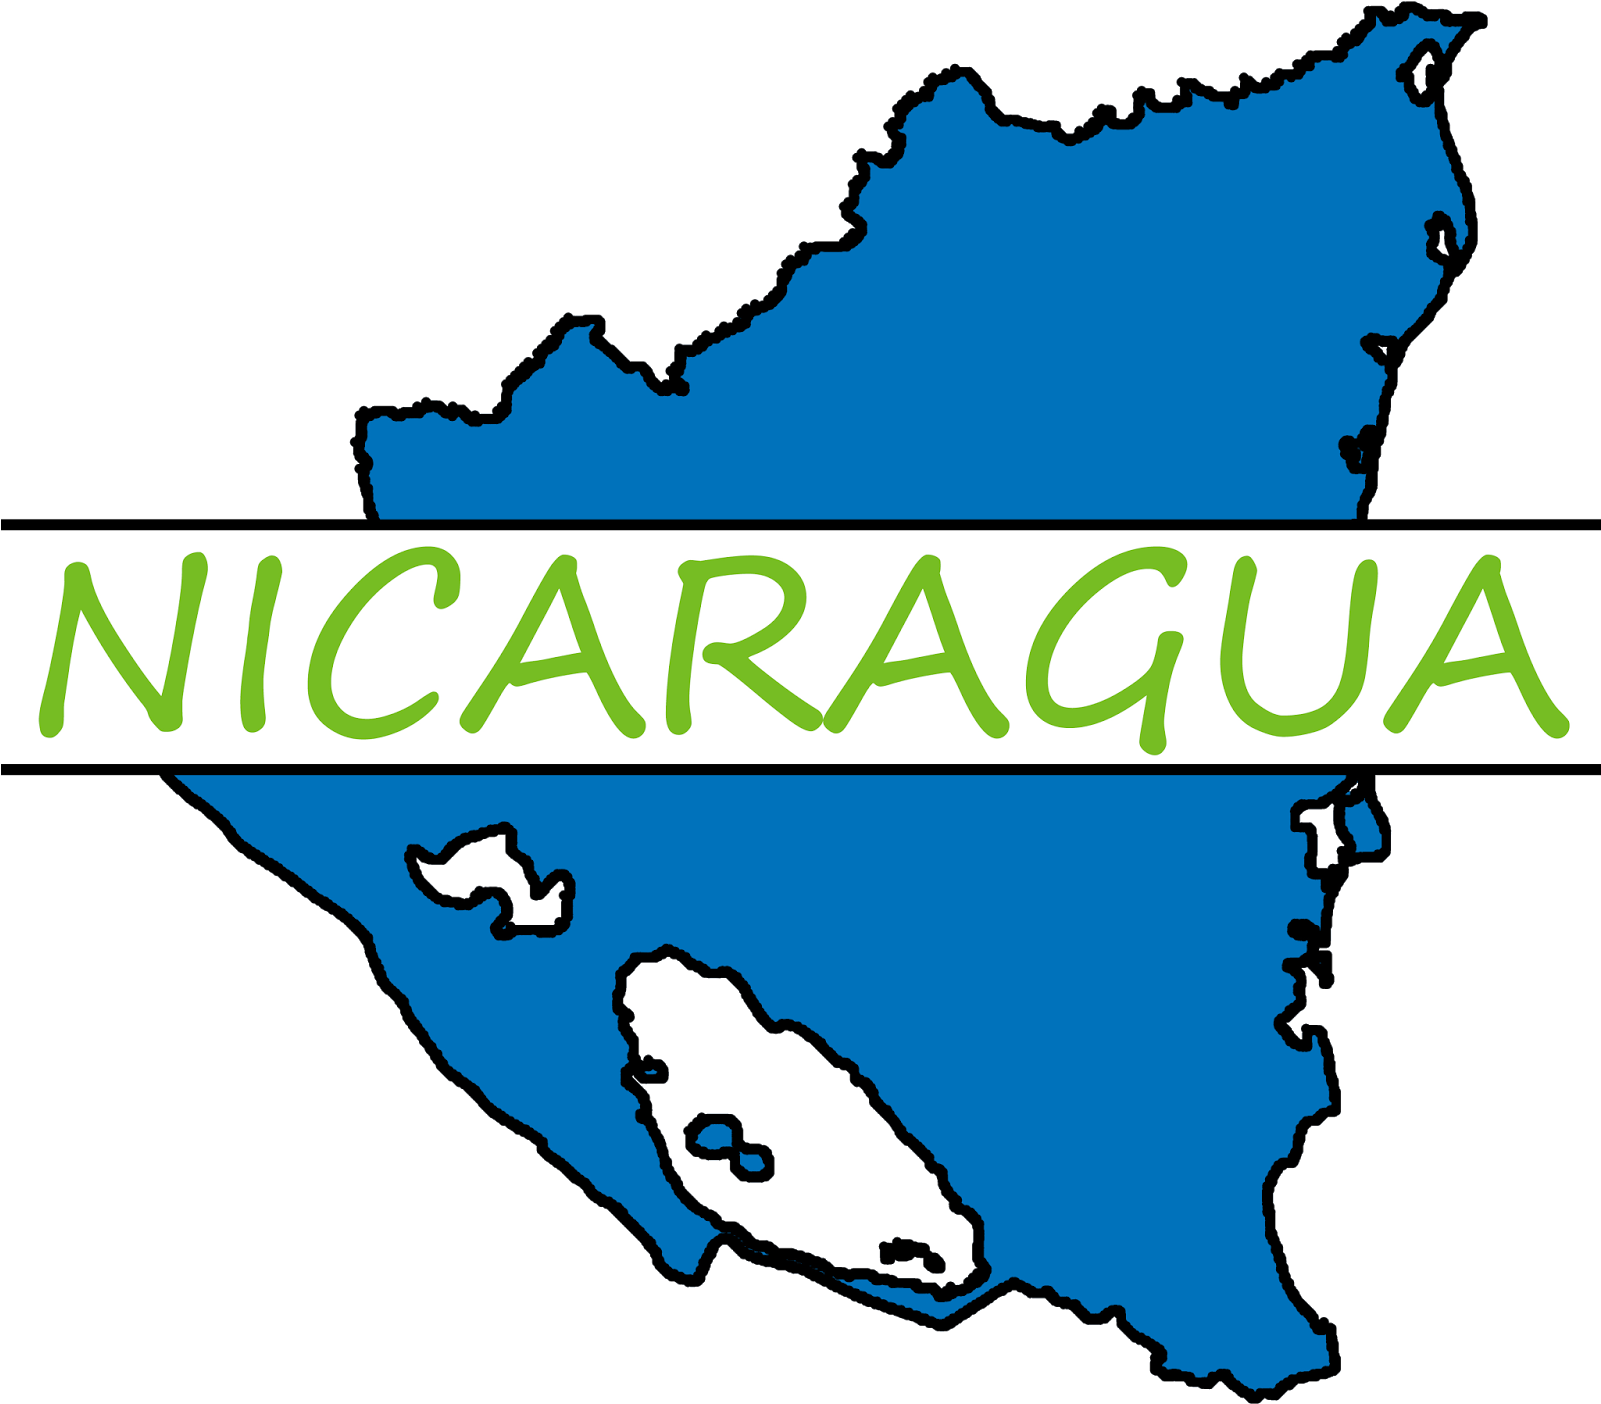 Nicaragua Map Outlinewith Name